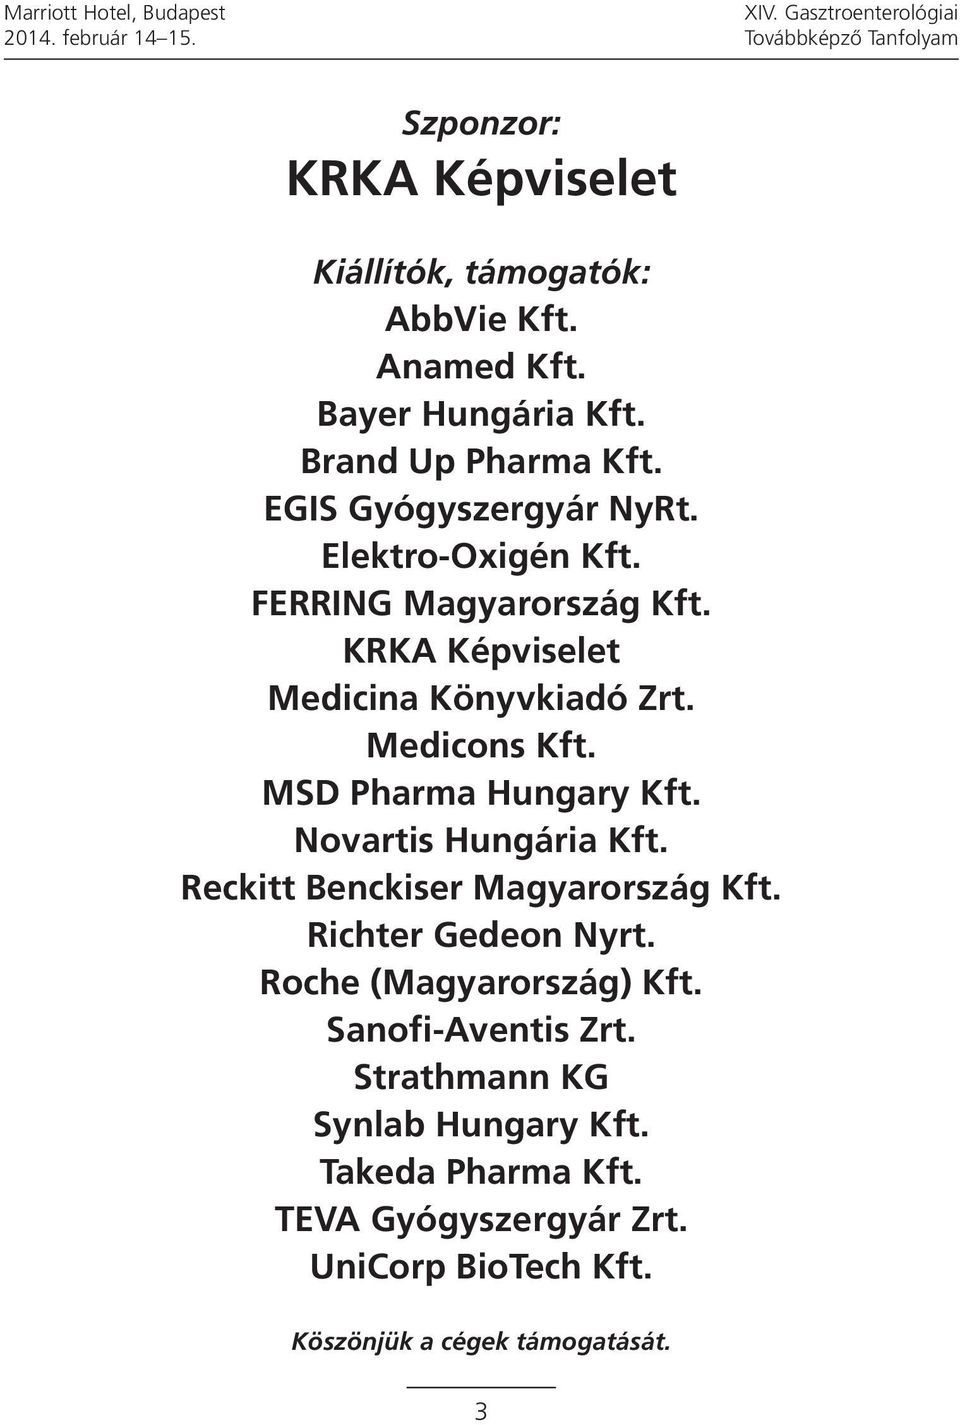 KRKA Képviselet Medicina Könyvkiadó Zrt. Medicons Kft. MSD Pharma Hungary Kft. Novartis Hungária Kft. Reckitt Benckiser Magyarország Kft.